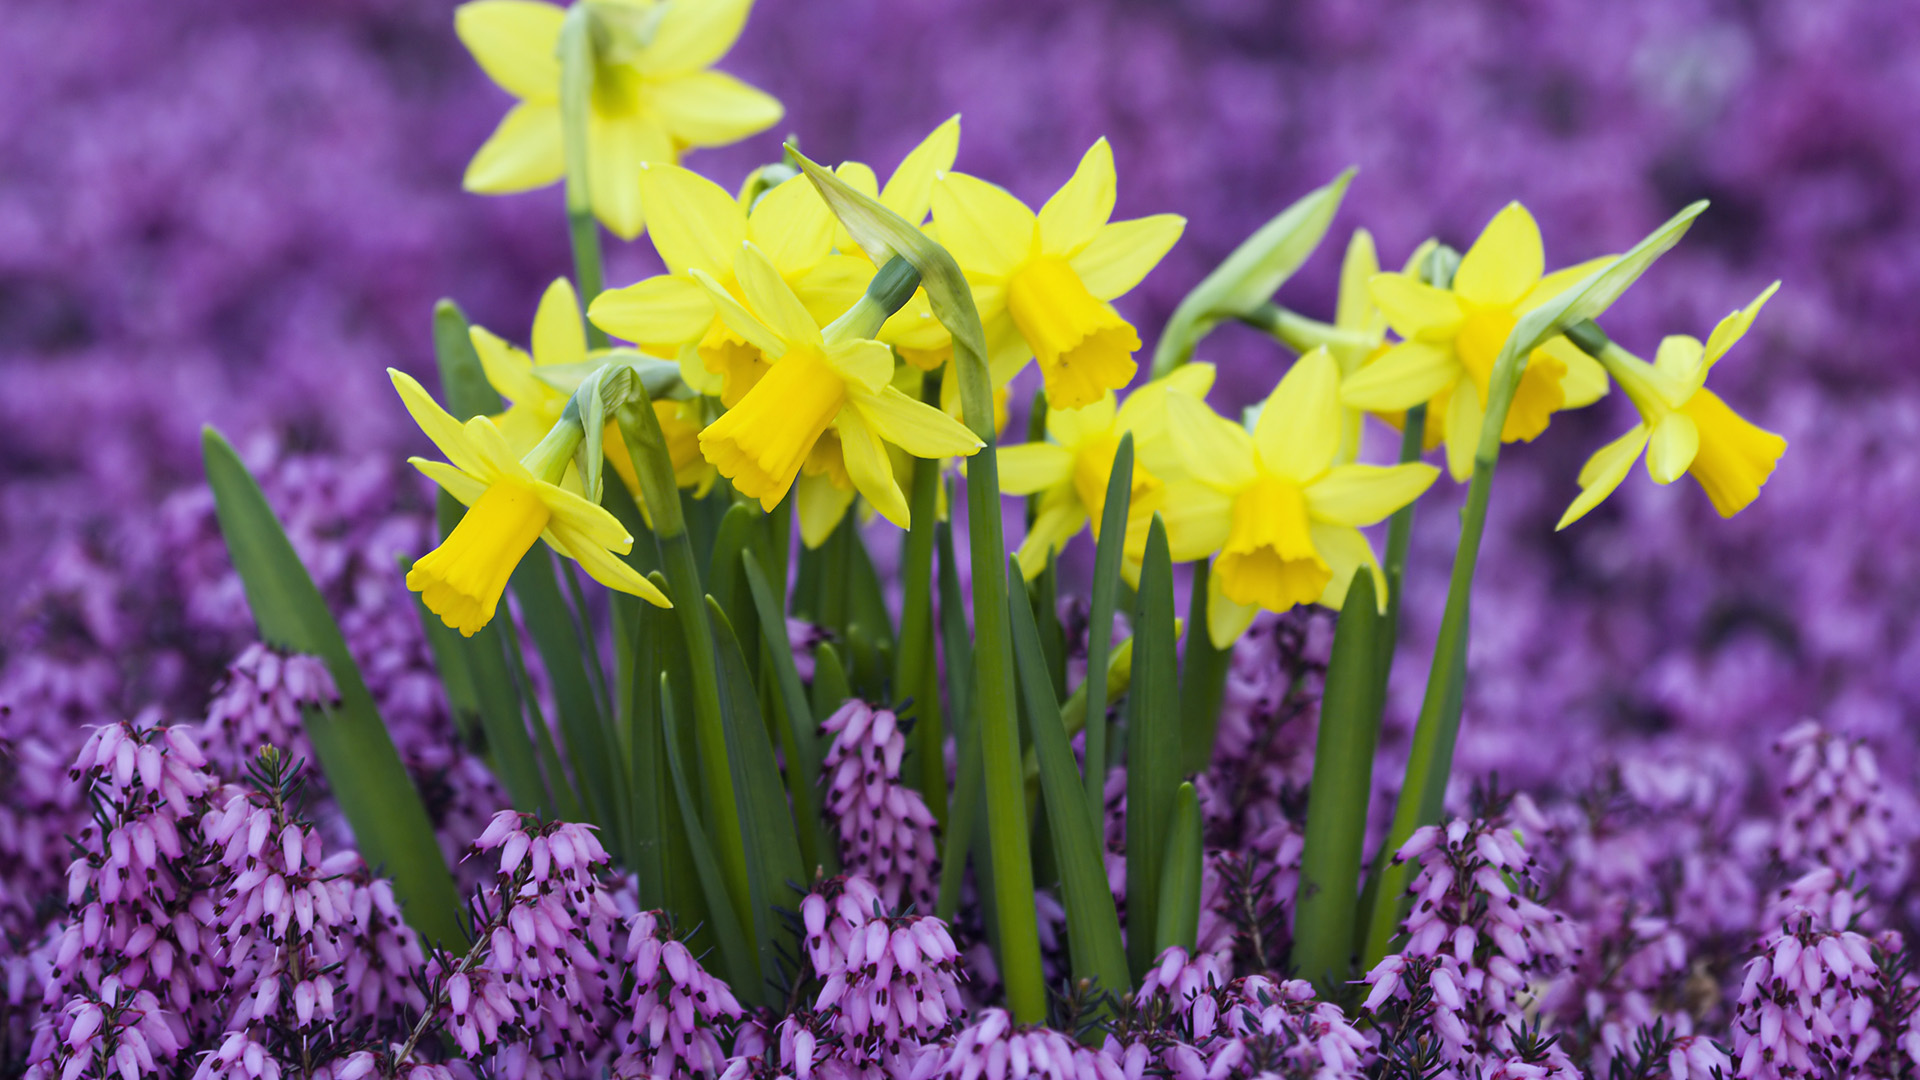 yellow daffodils in purple heather germany